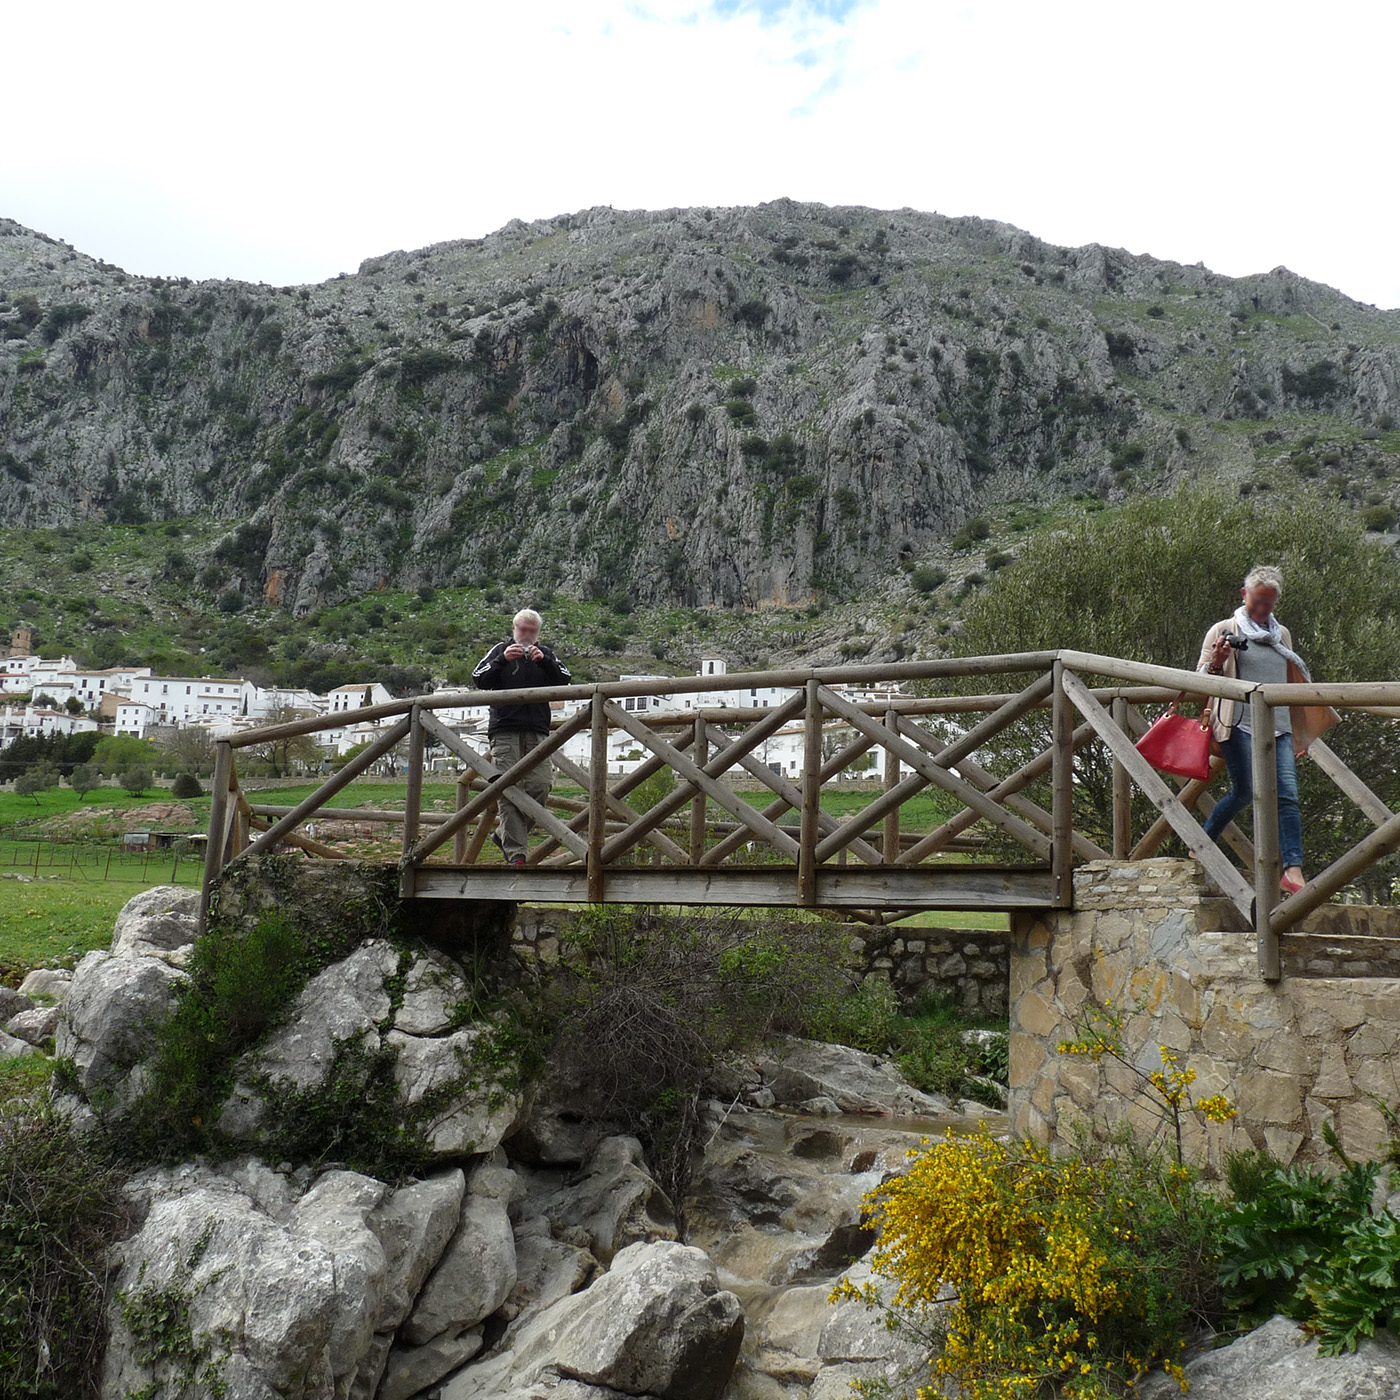  4x4 Route Through The White Villages Of The Sierra Of Cadiz - Natural Park Of Grazalema 2 - Rutasiete